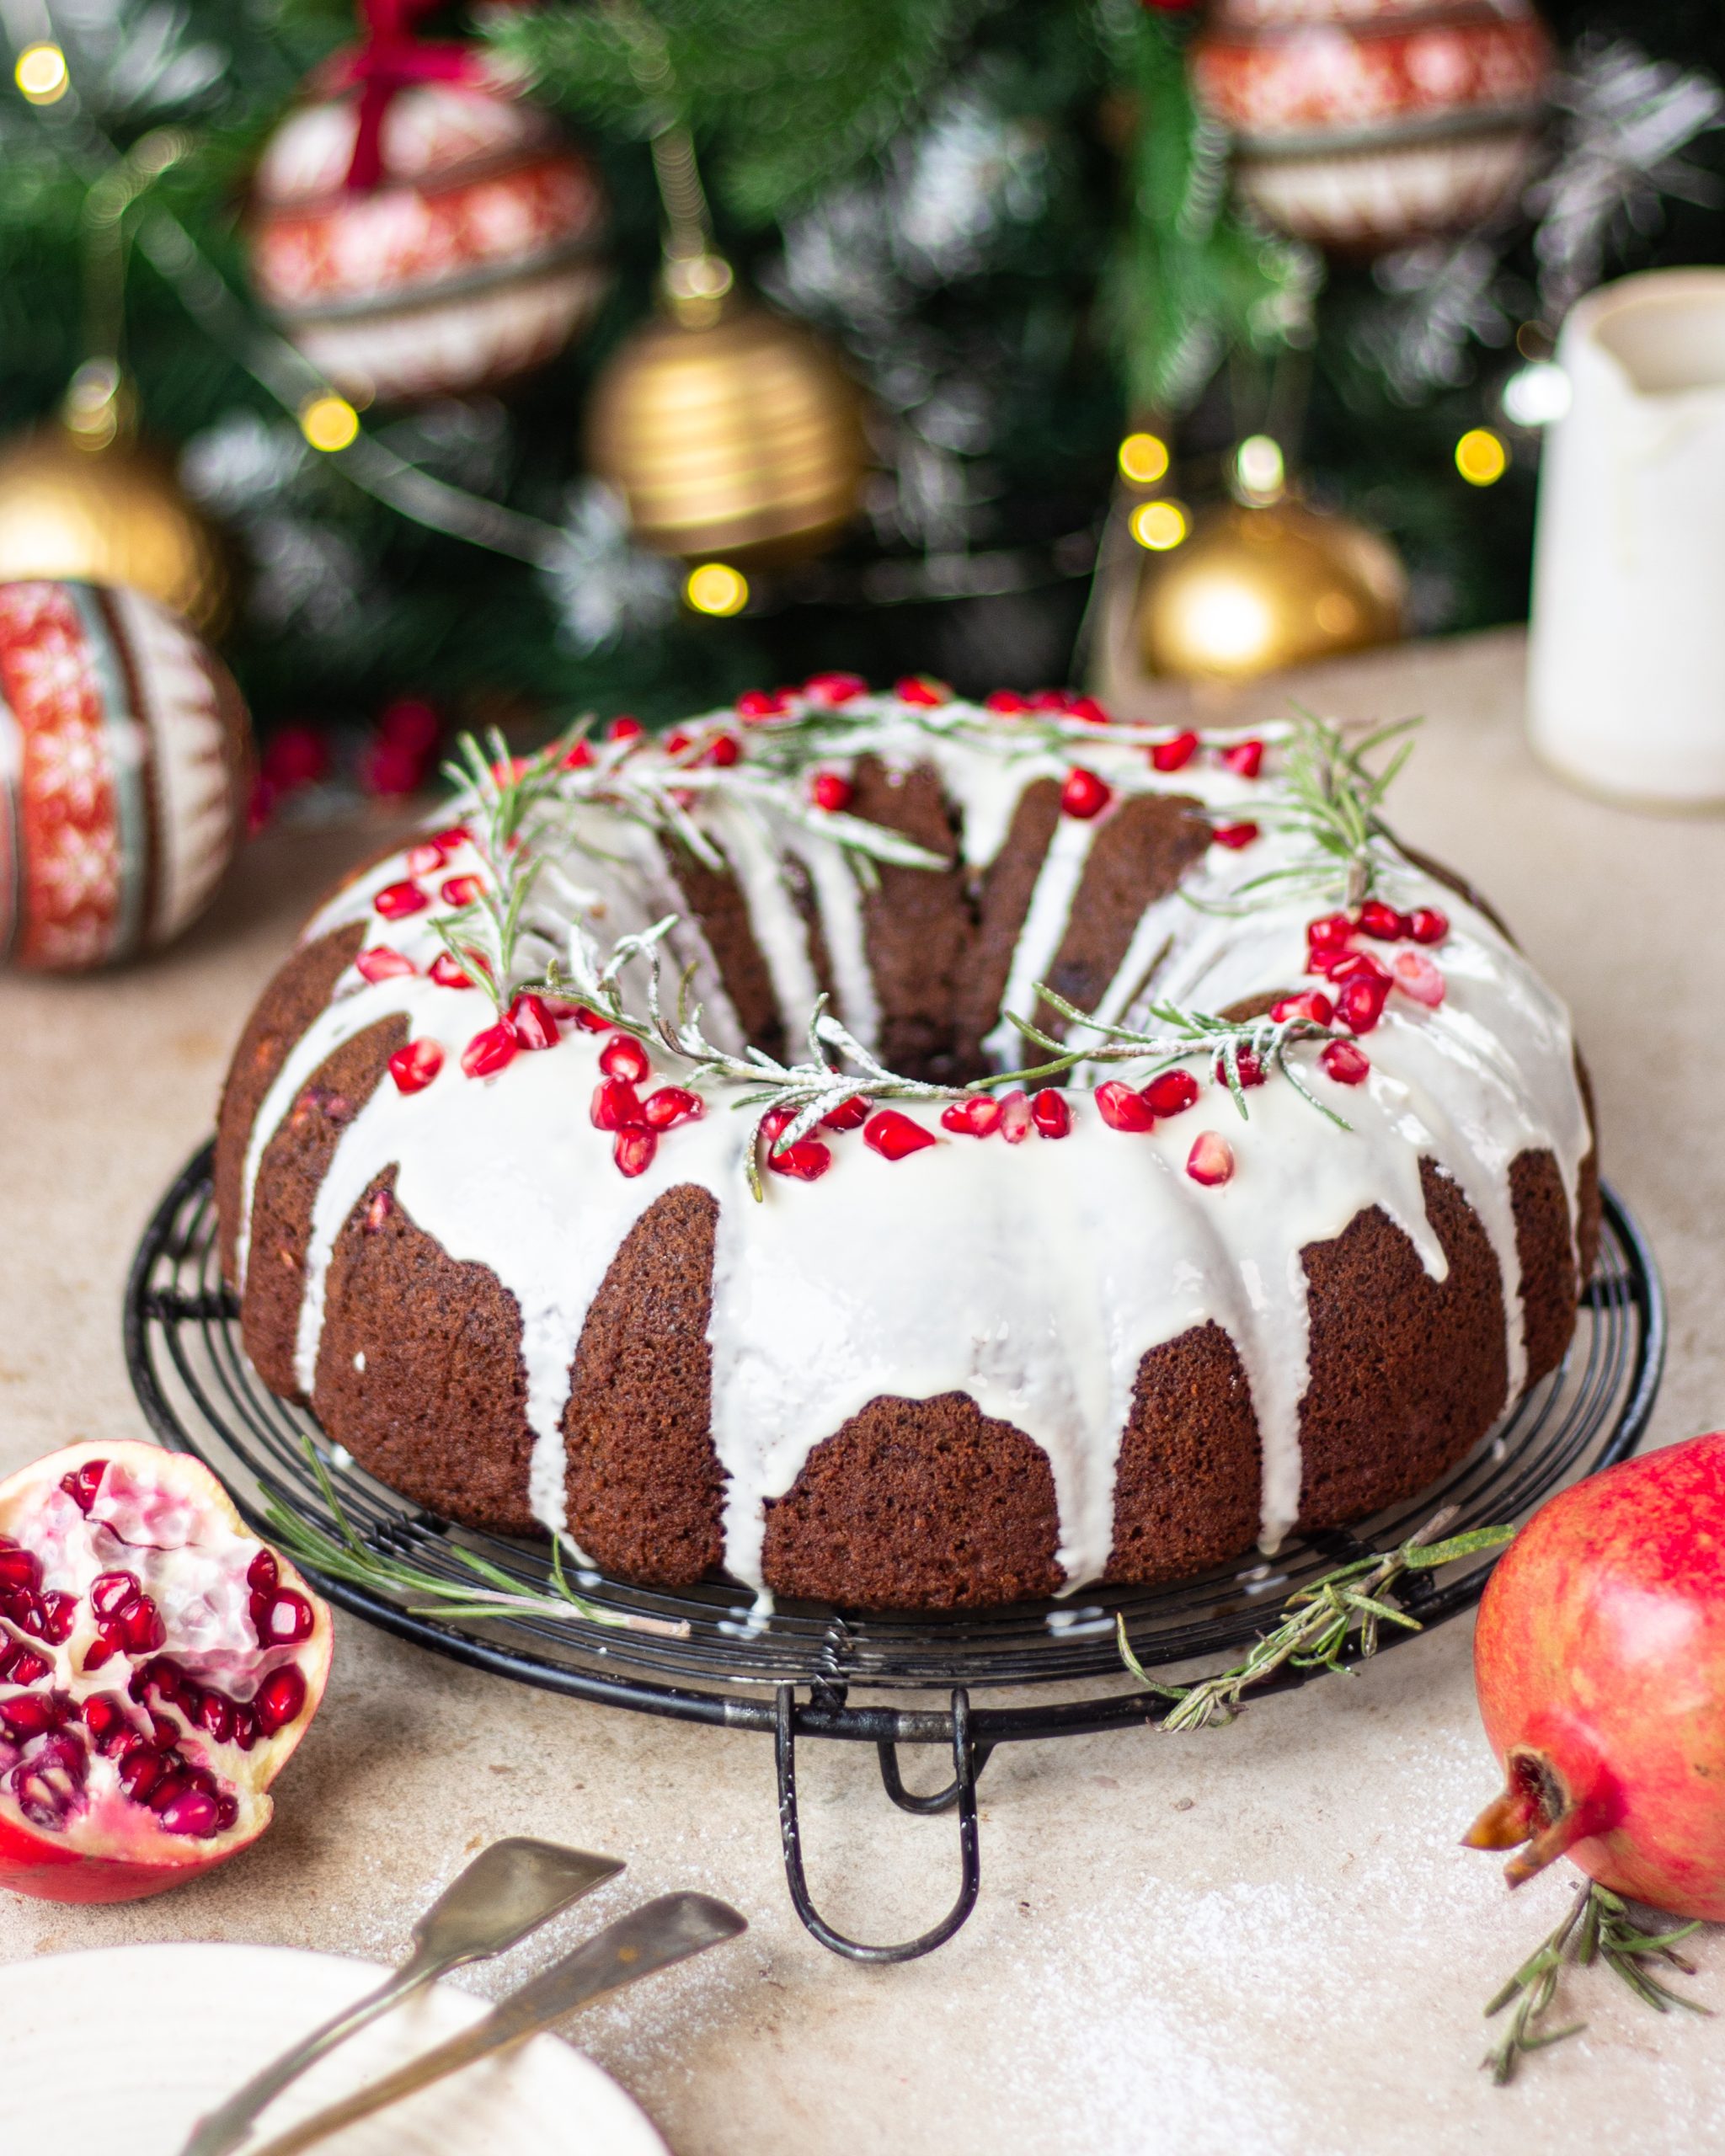 Chocolate pomegranate bundt cake - Bake with Shivesh